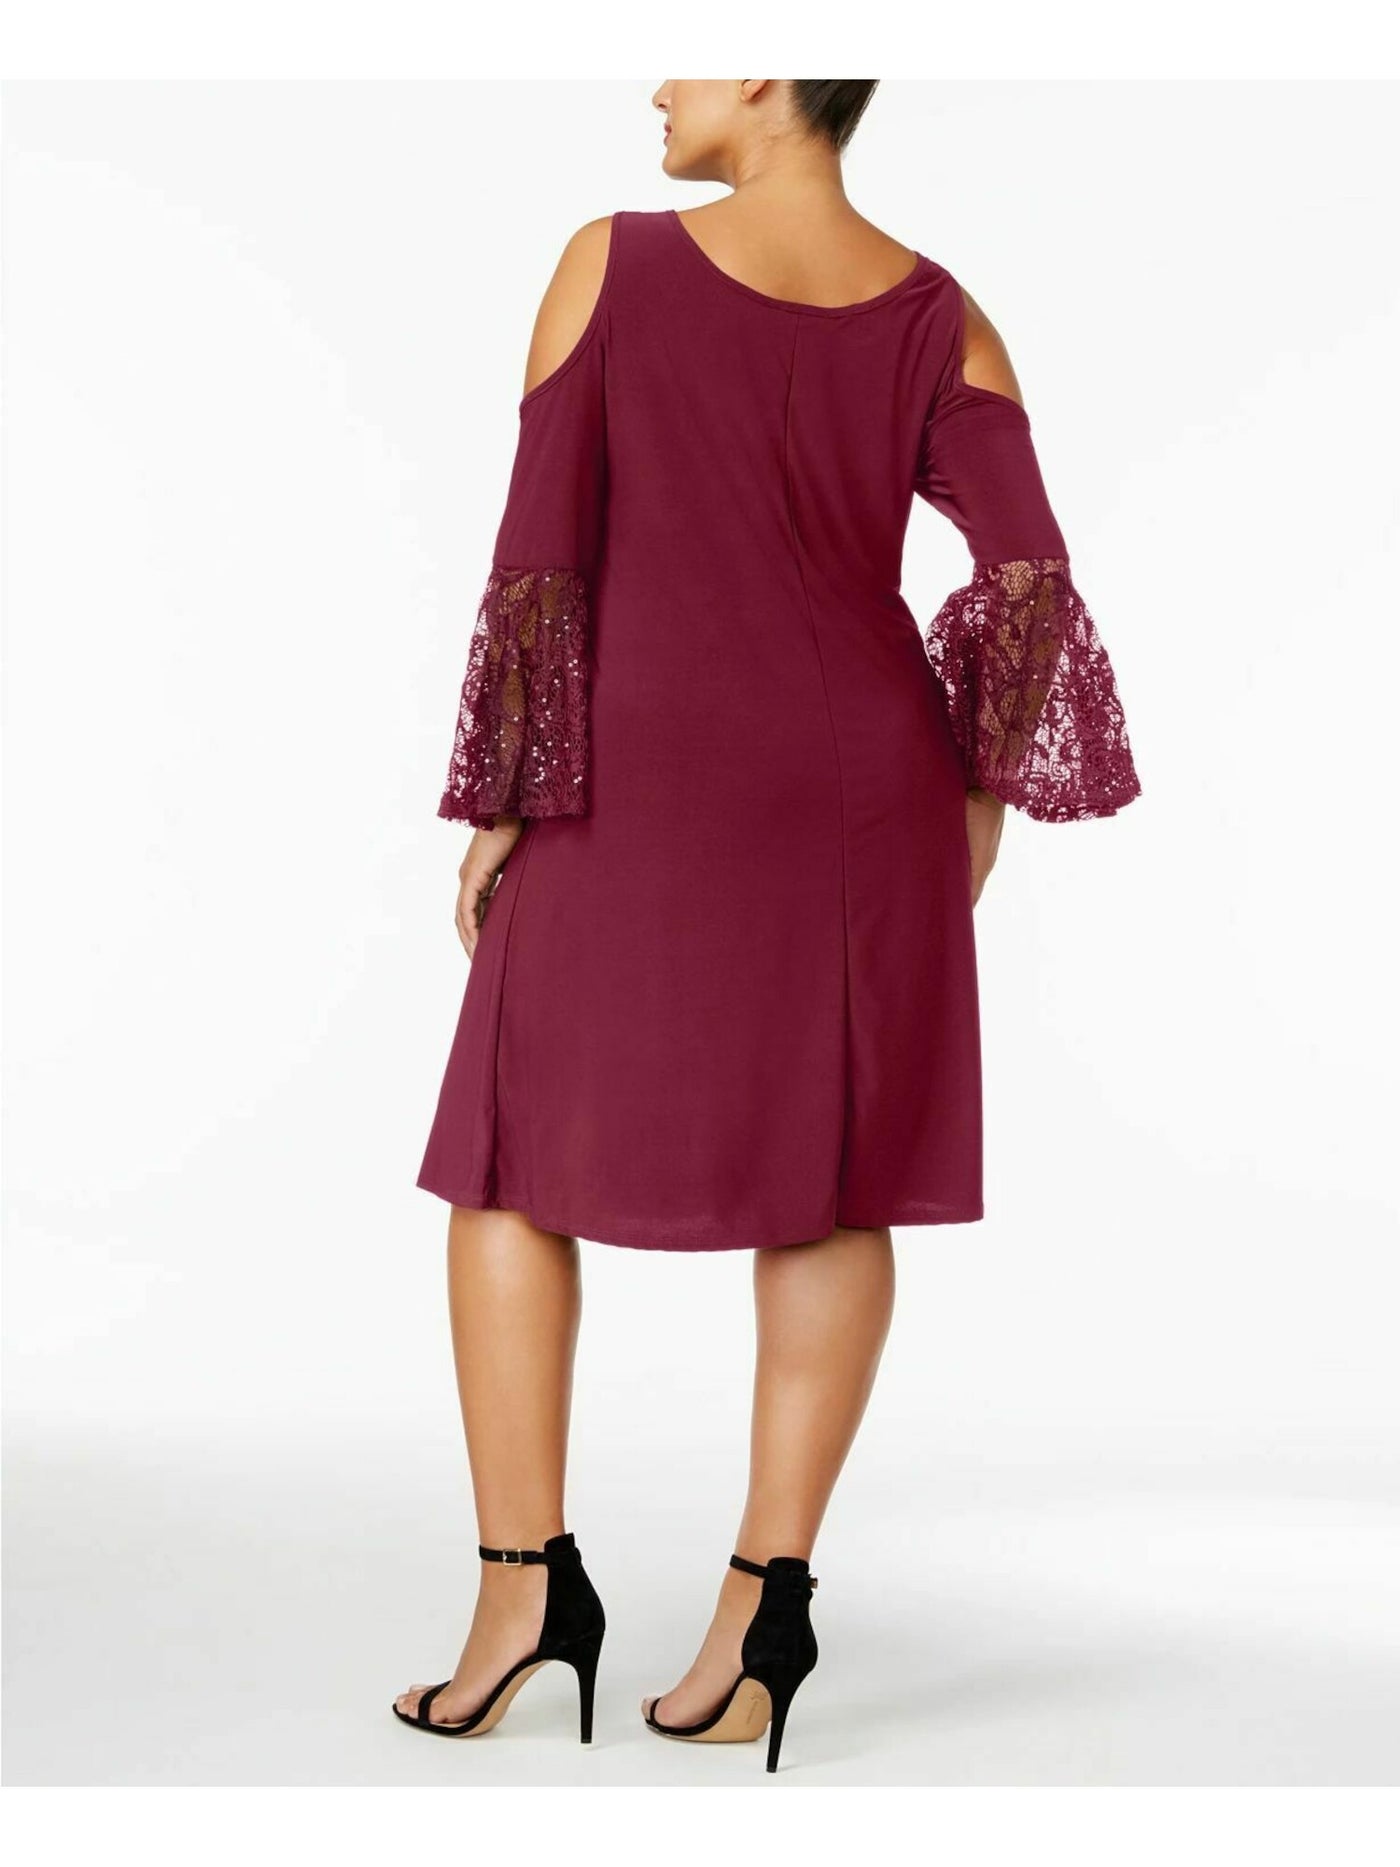 R&M RICHARDS Womens Burgundy Lace Cold Shoulder Bell Sleeve Scoop Neck Knee Length Fit + Flare Dress Plus 20W